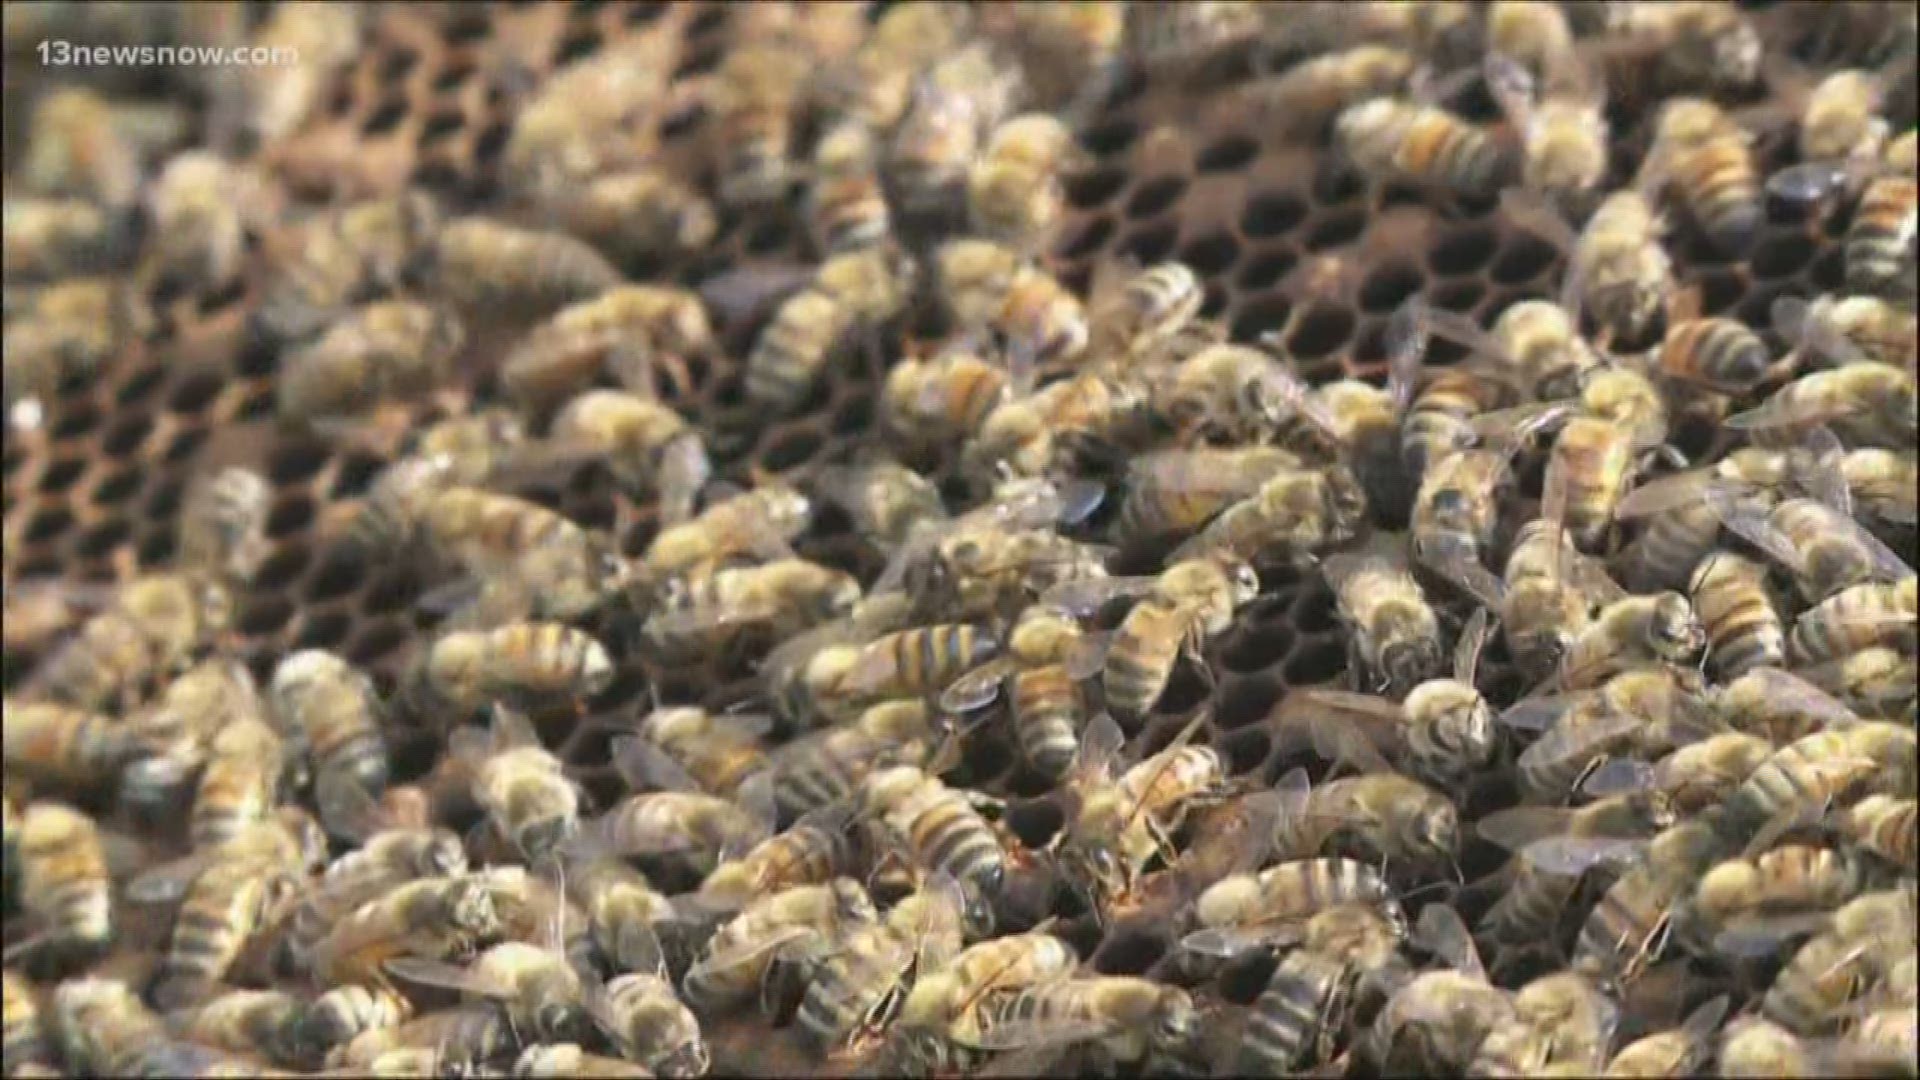 It's swarming season for Hampton Roads honey bees.